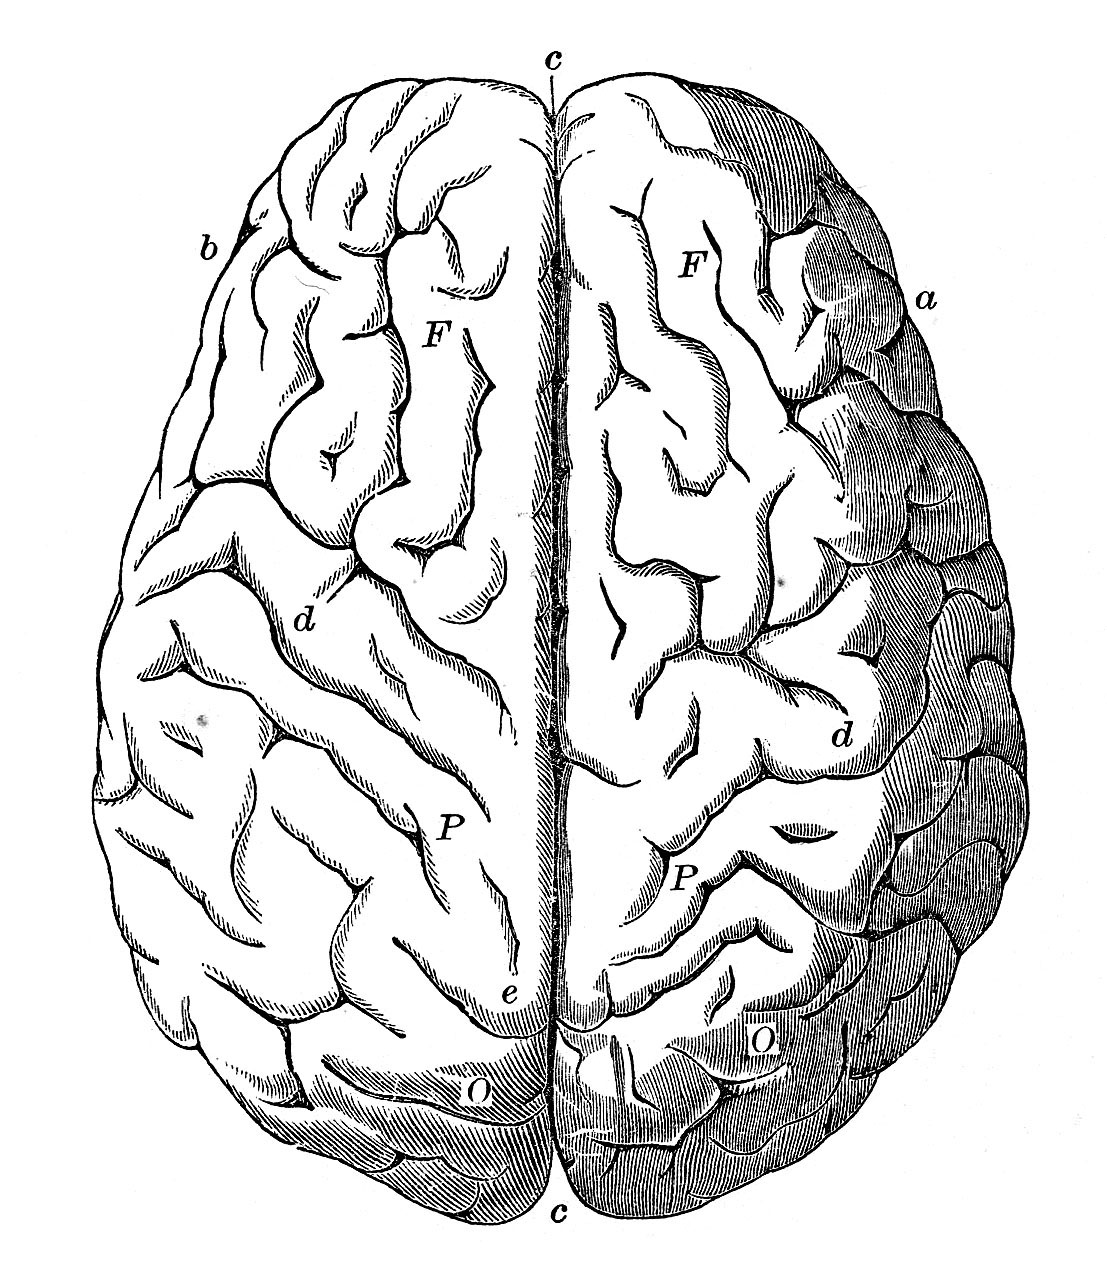 Нижнее полушарие мозга. Мозг вид сверху. Человеческий мозг вид сверху. Симметричный мозг. Полушария мозга вид сверху.